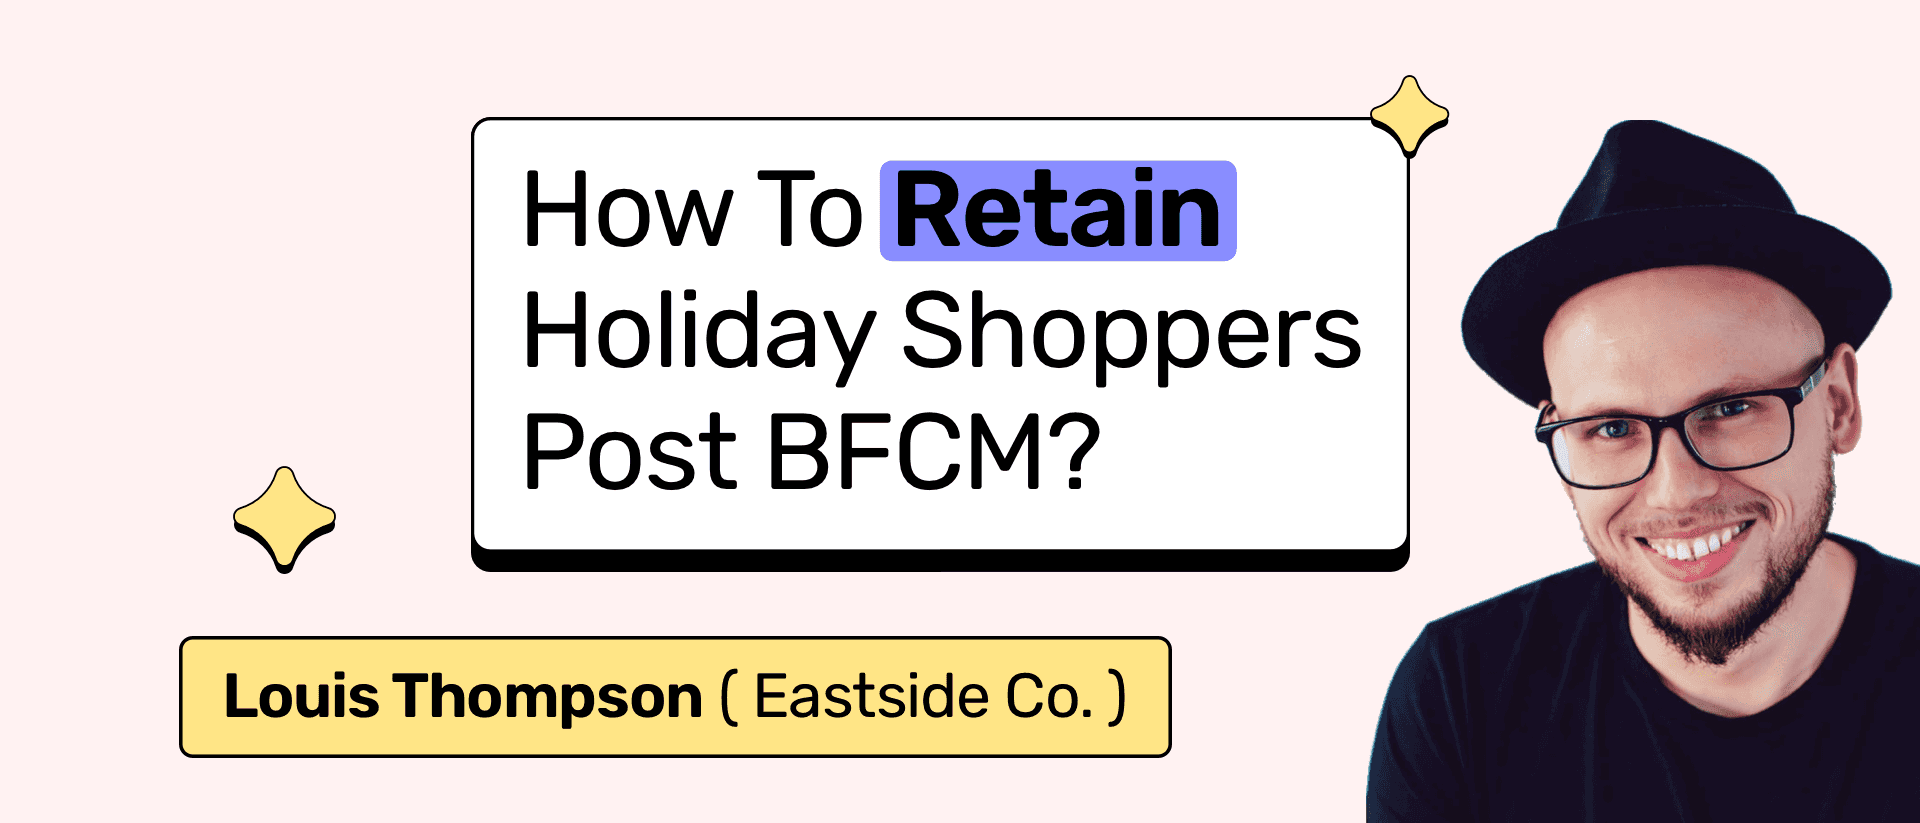 bfcm-customer-retention-strategies